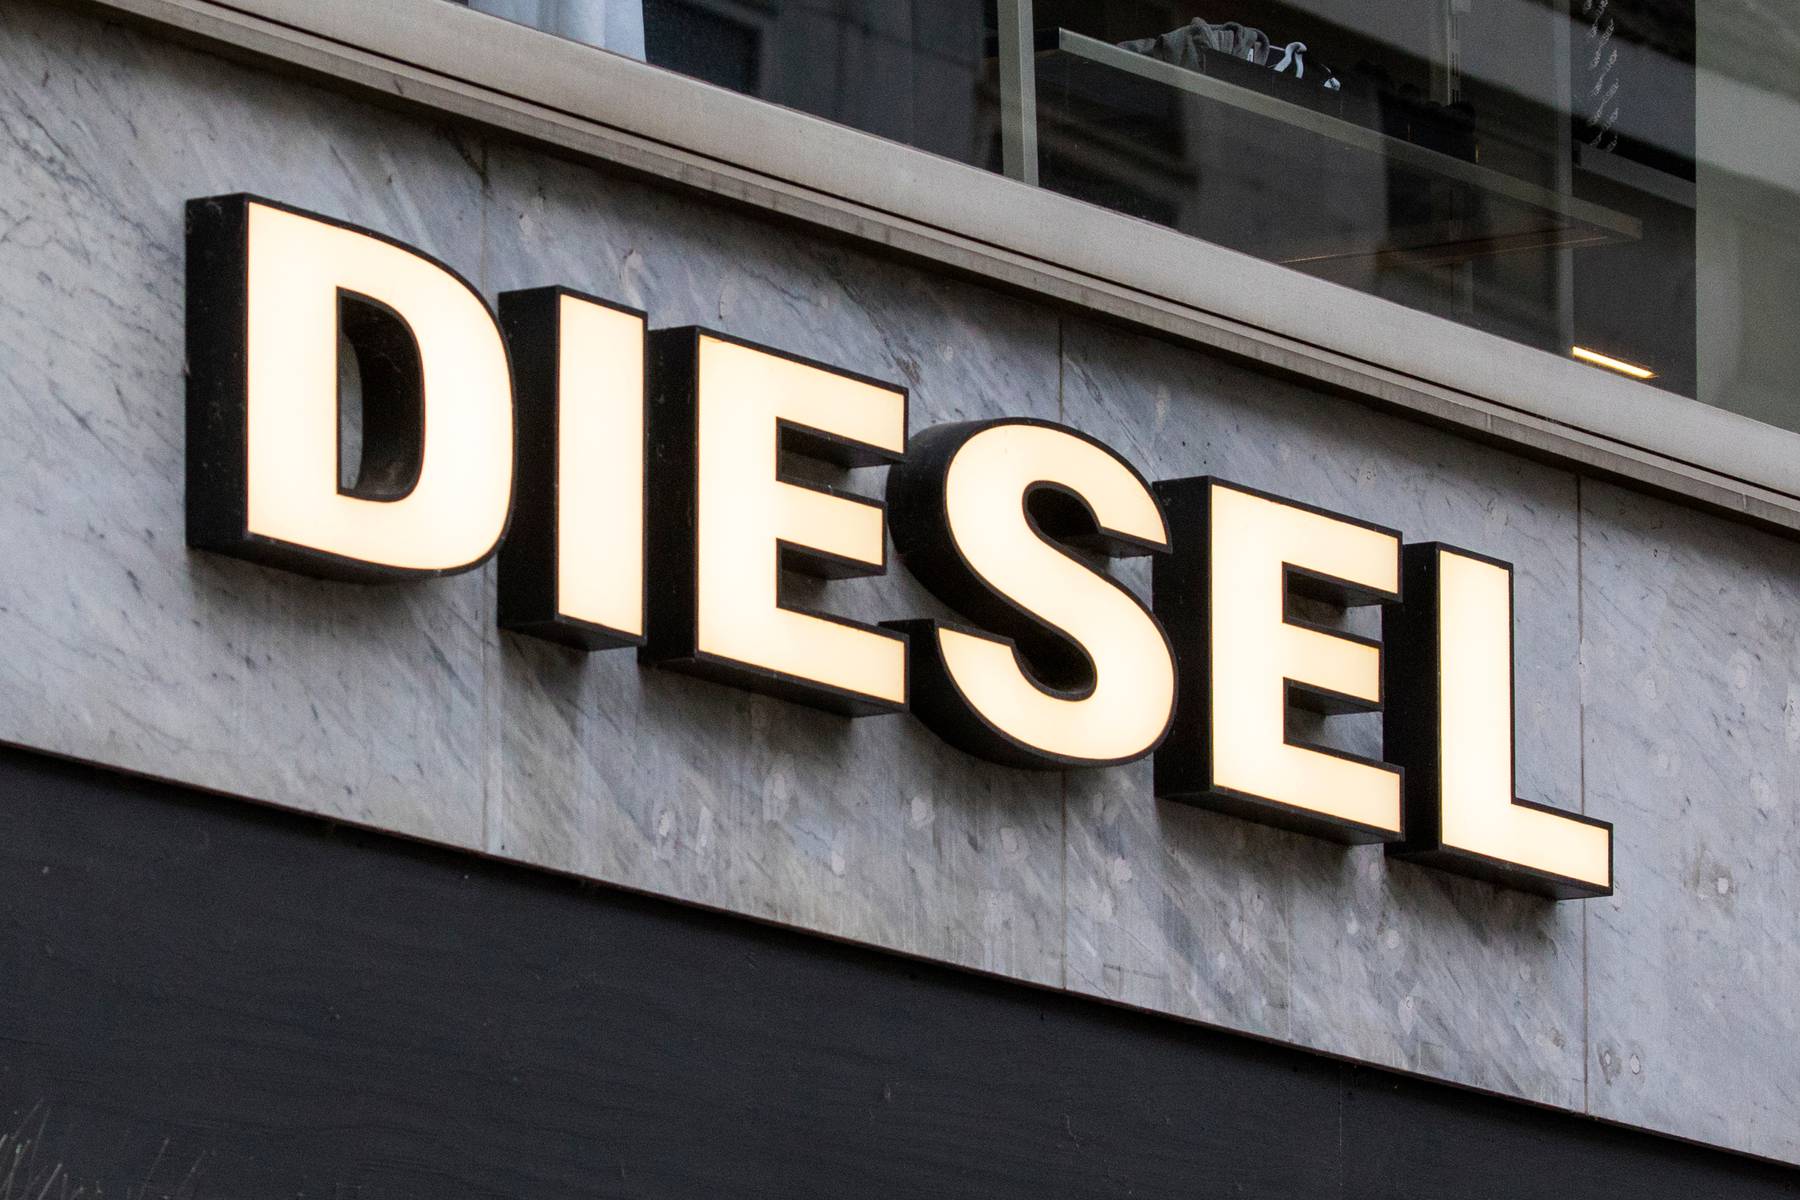 Diesel store, Dusseldorf Germany. Shutterstock.